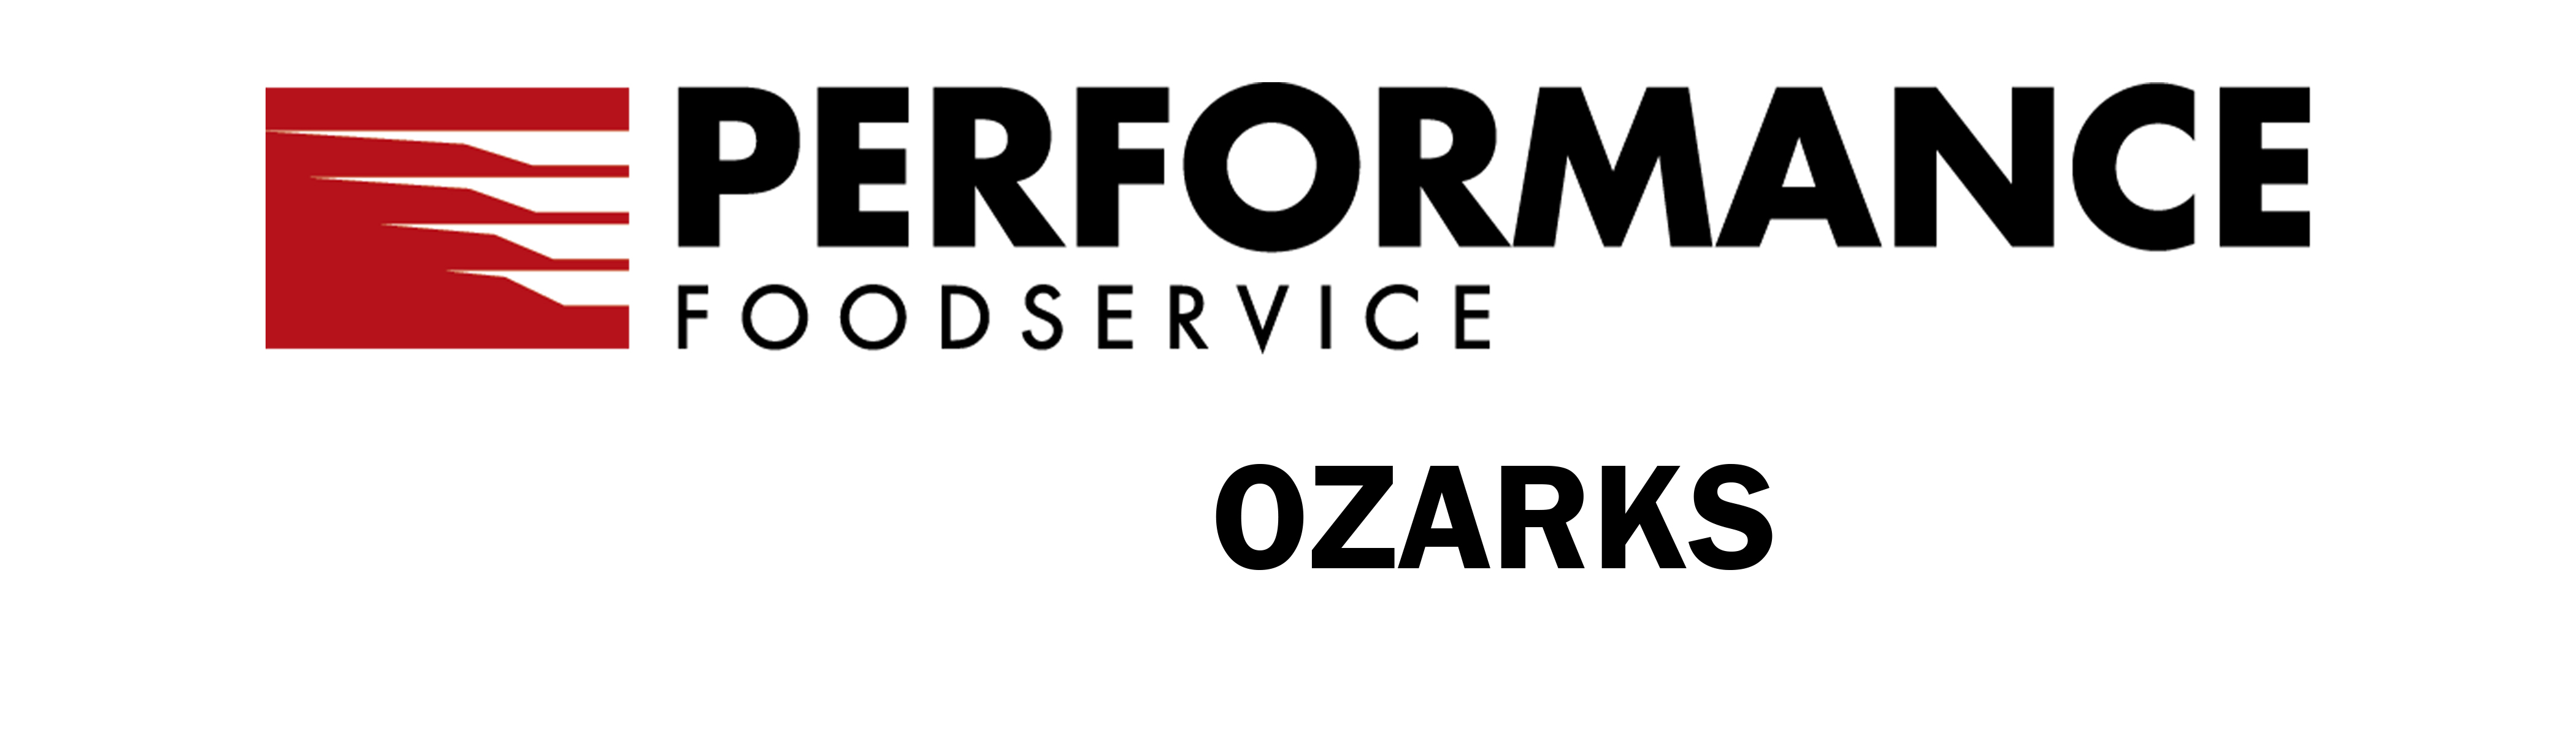 Performance Foodservice Ozarks